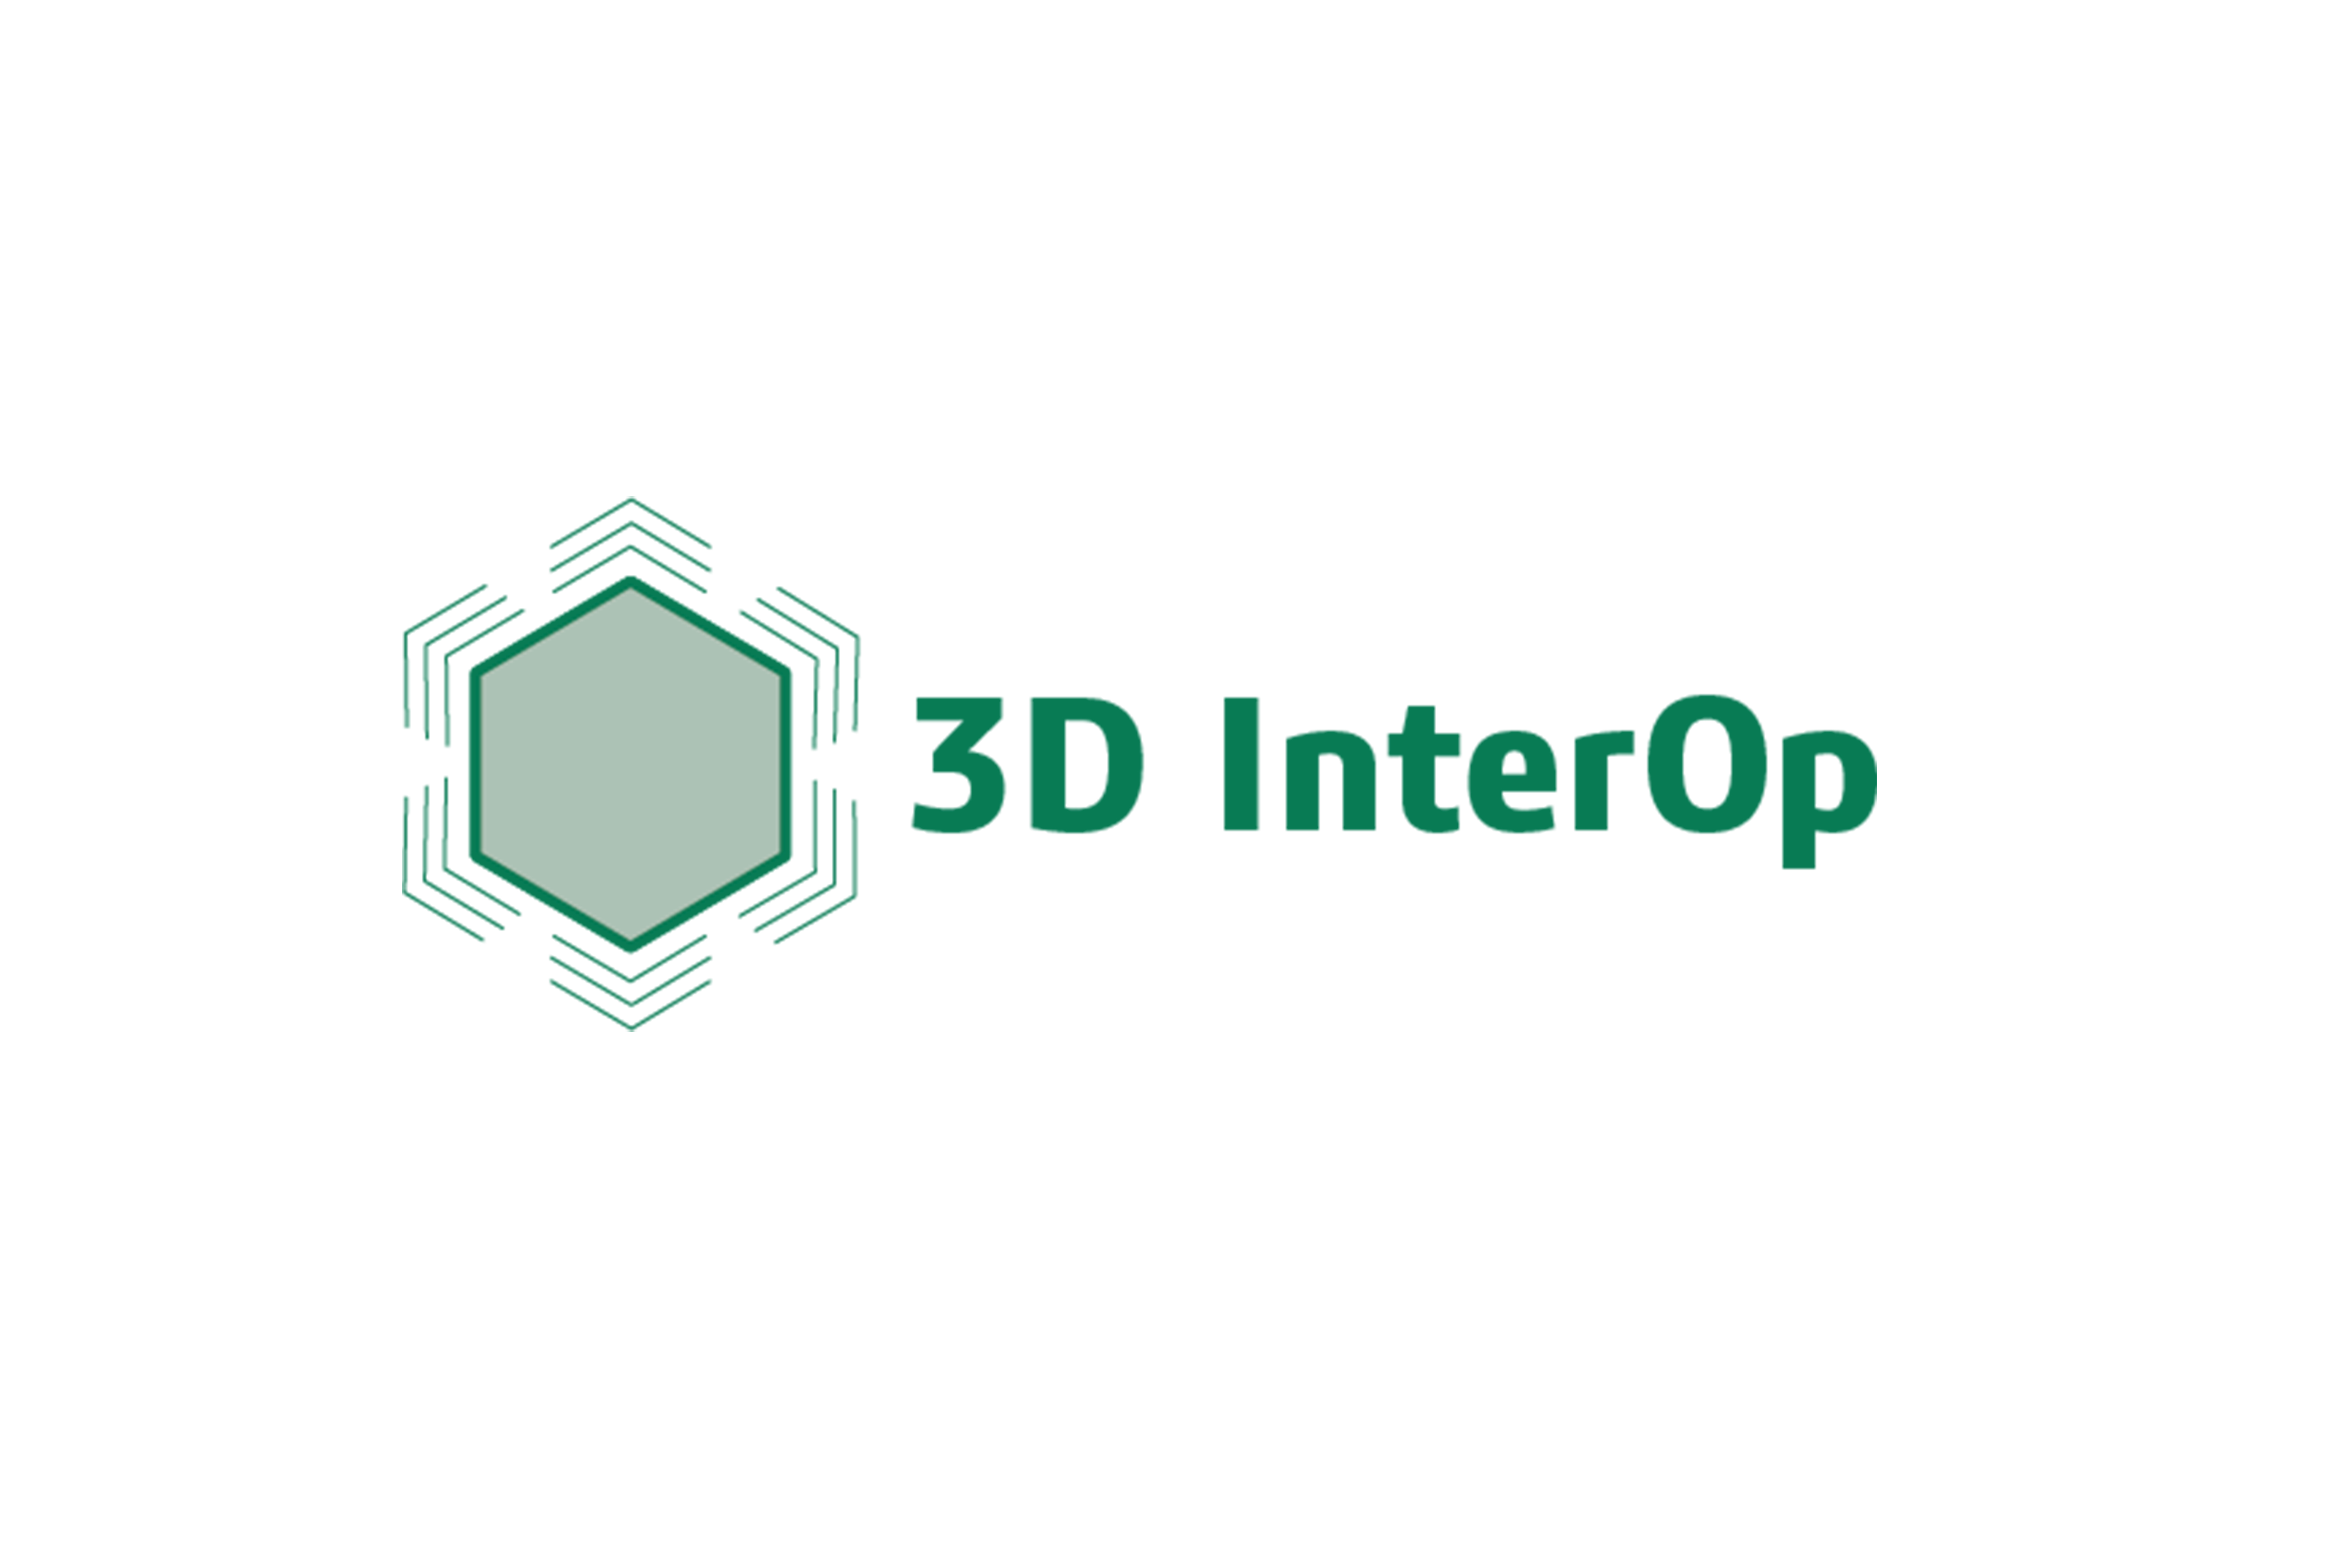 3D InterOp